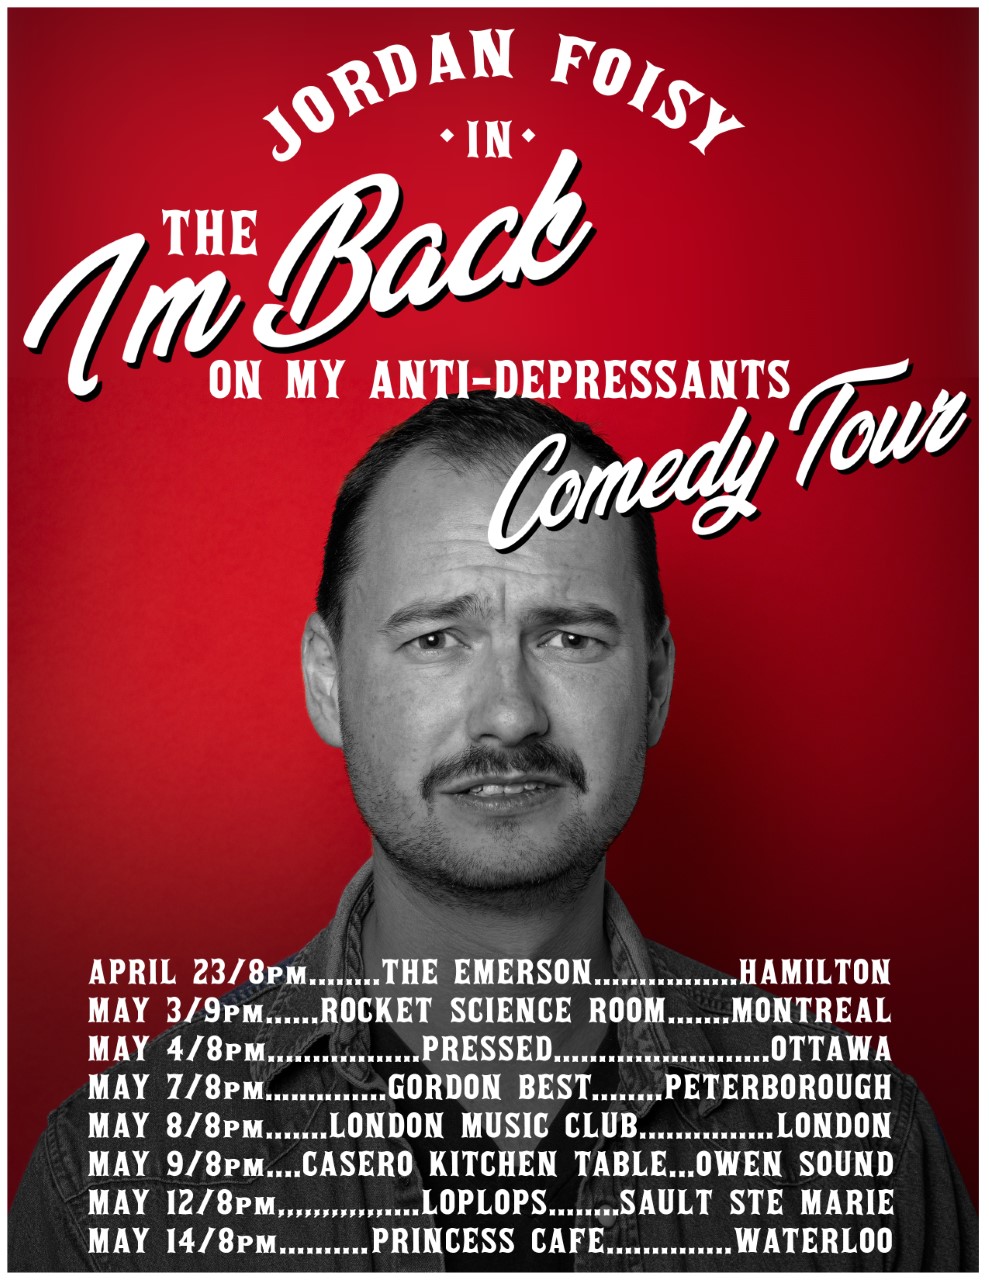 Jordan Foisy in the I'm Back On My Anti-Depressants Comedy Tour @ LMC!!!